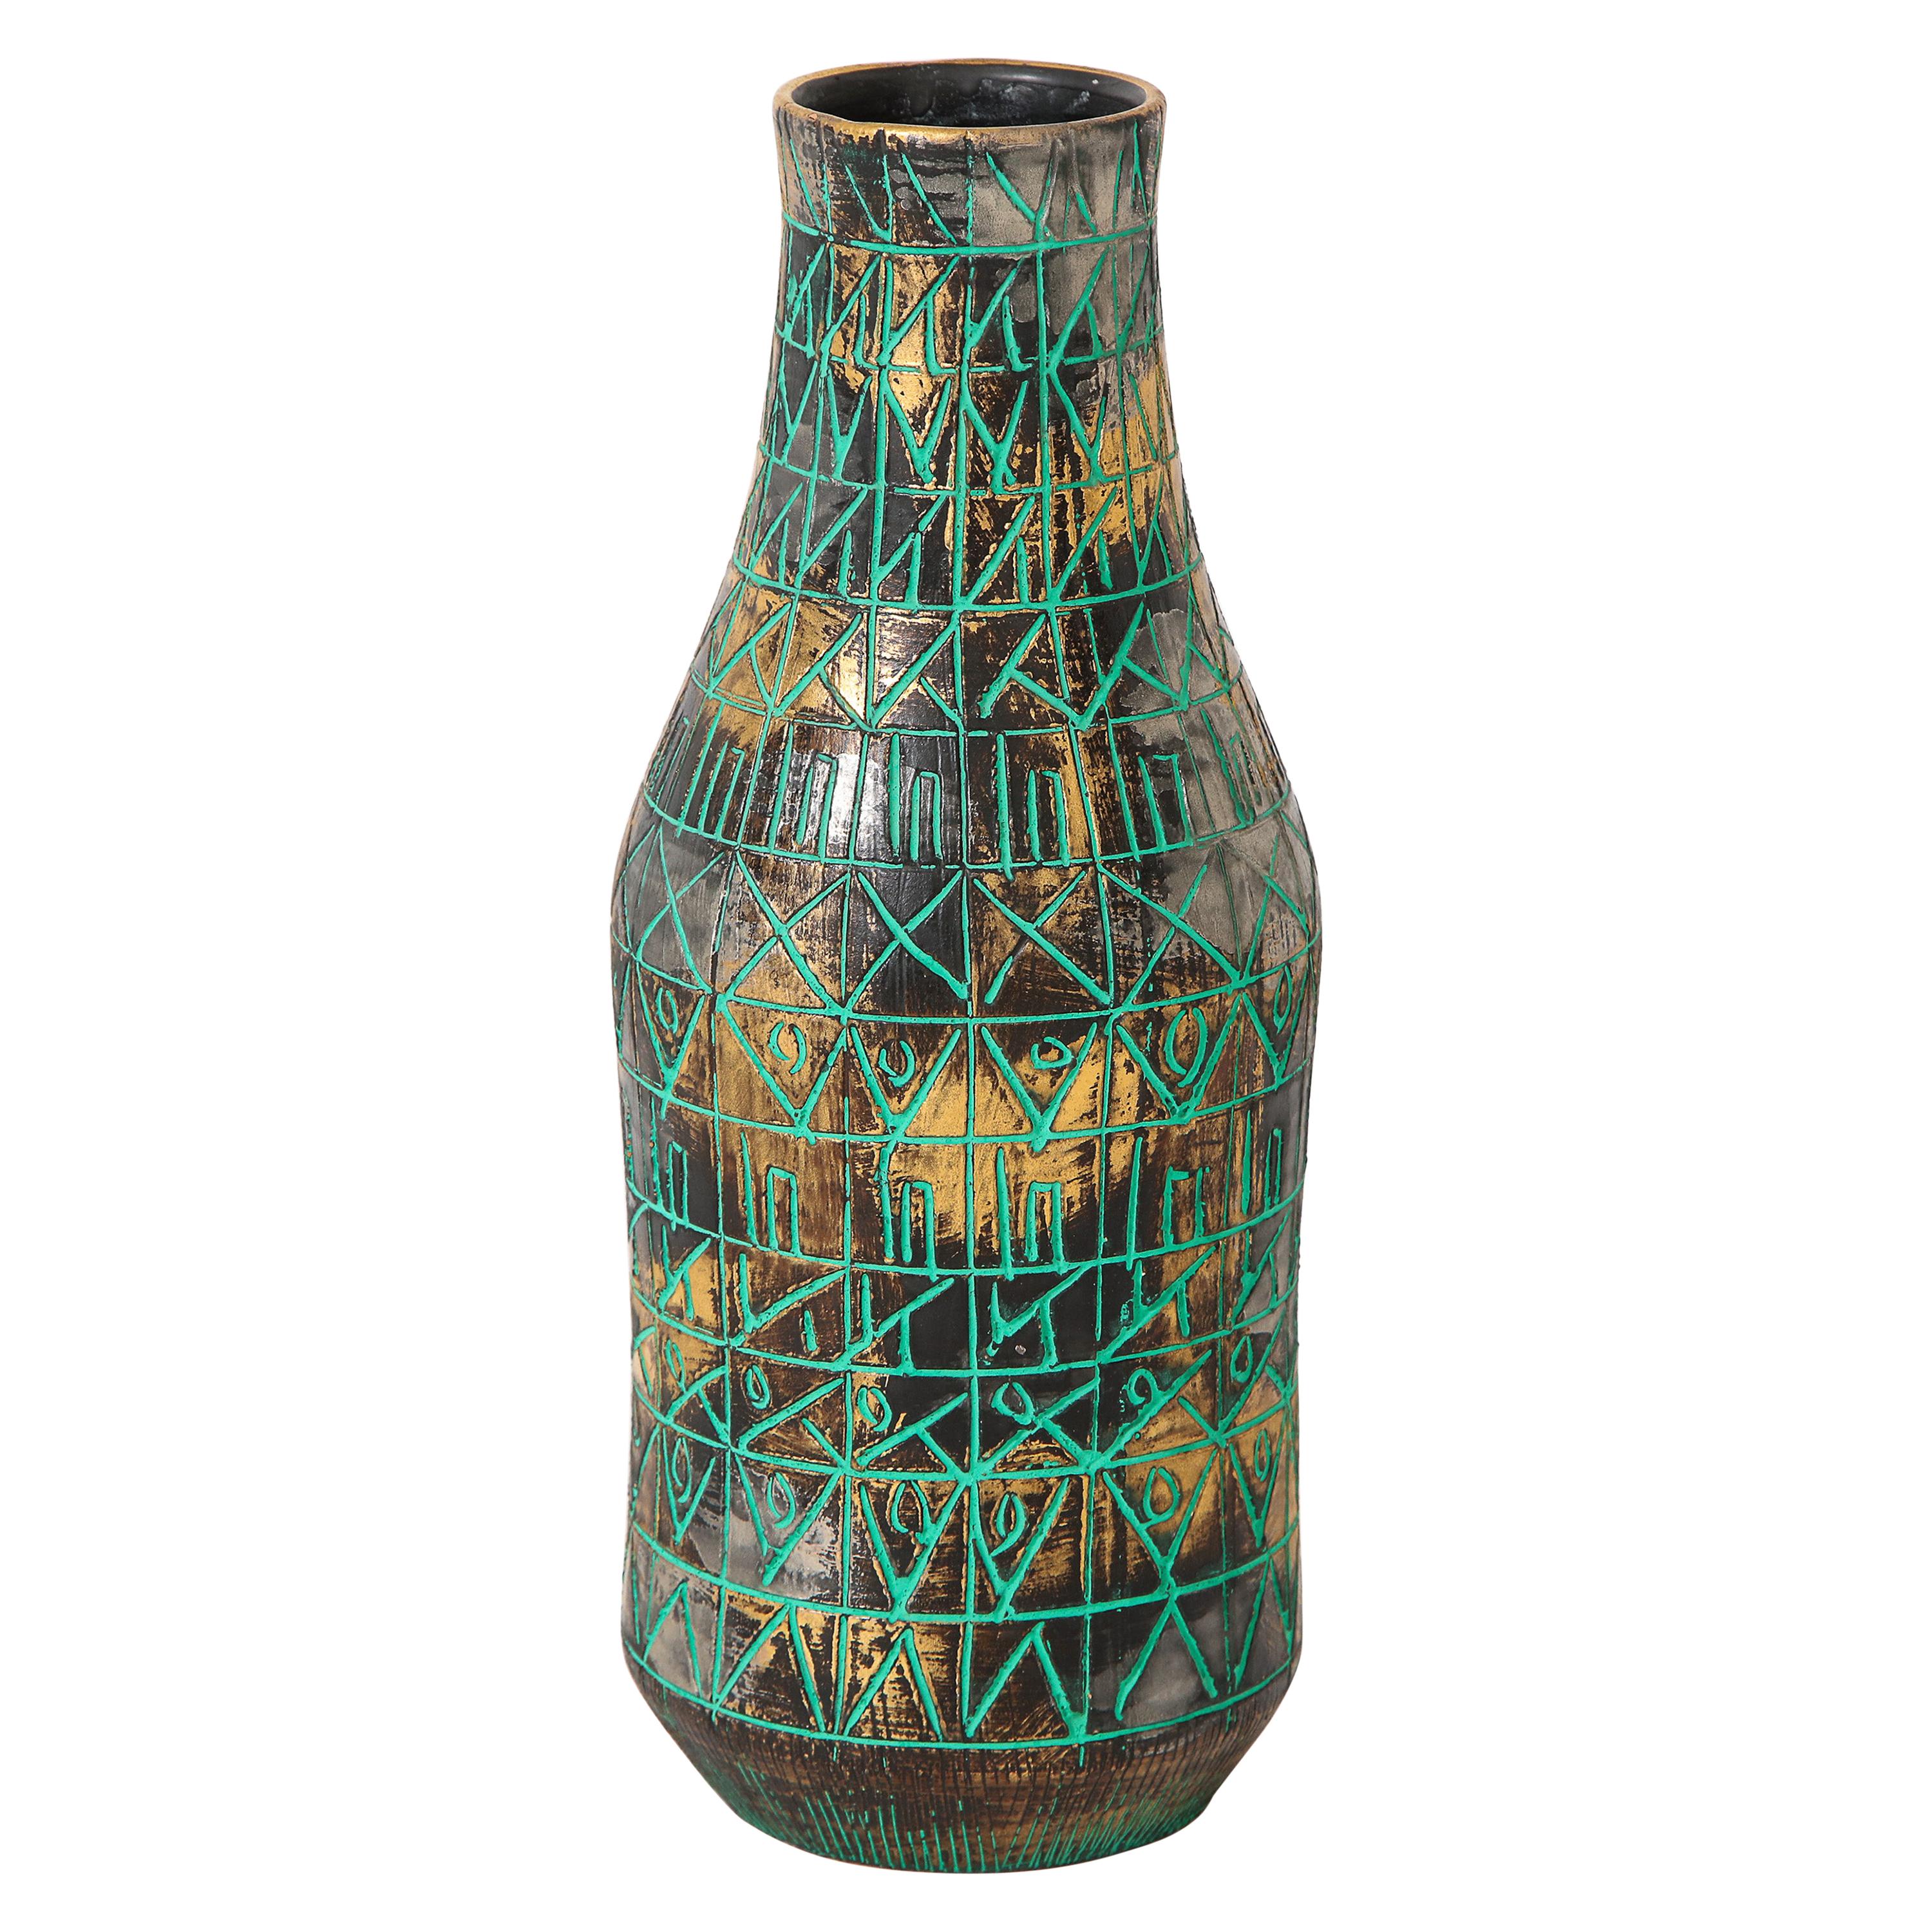 Vase Raymor en céramiquea avec Sgraffito vert sur or et chrome, signé